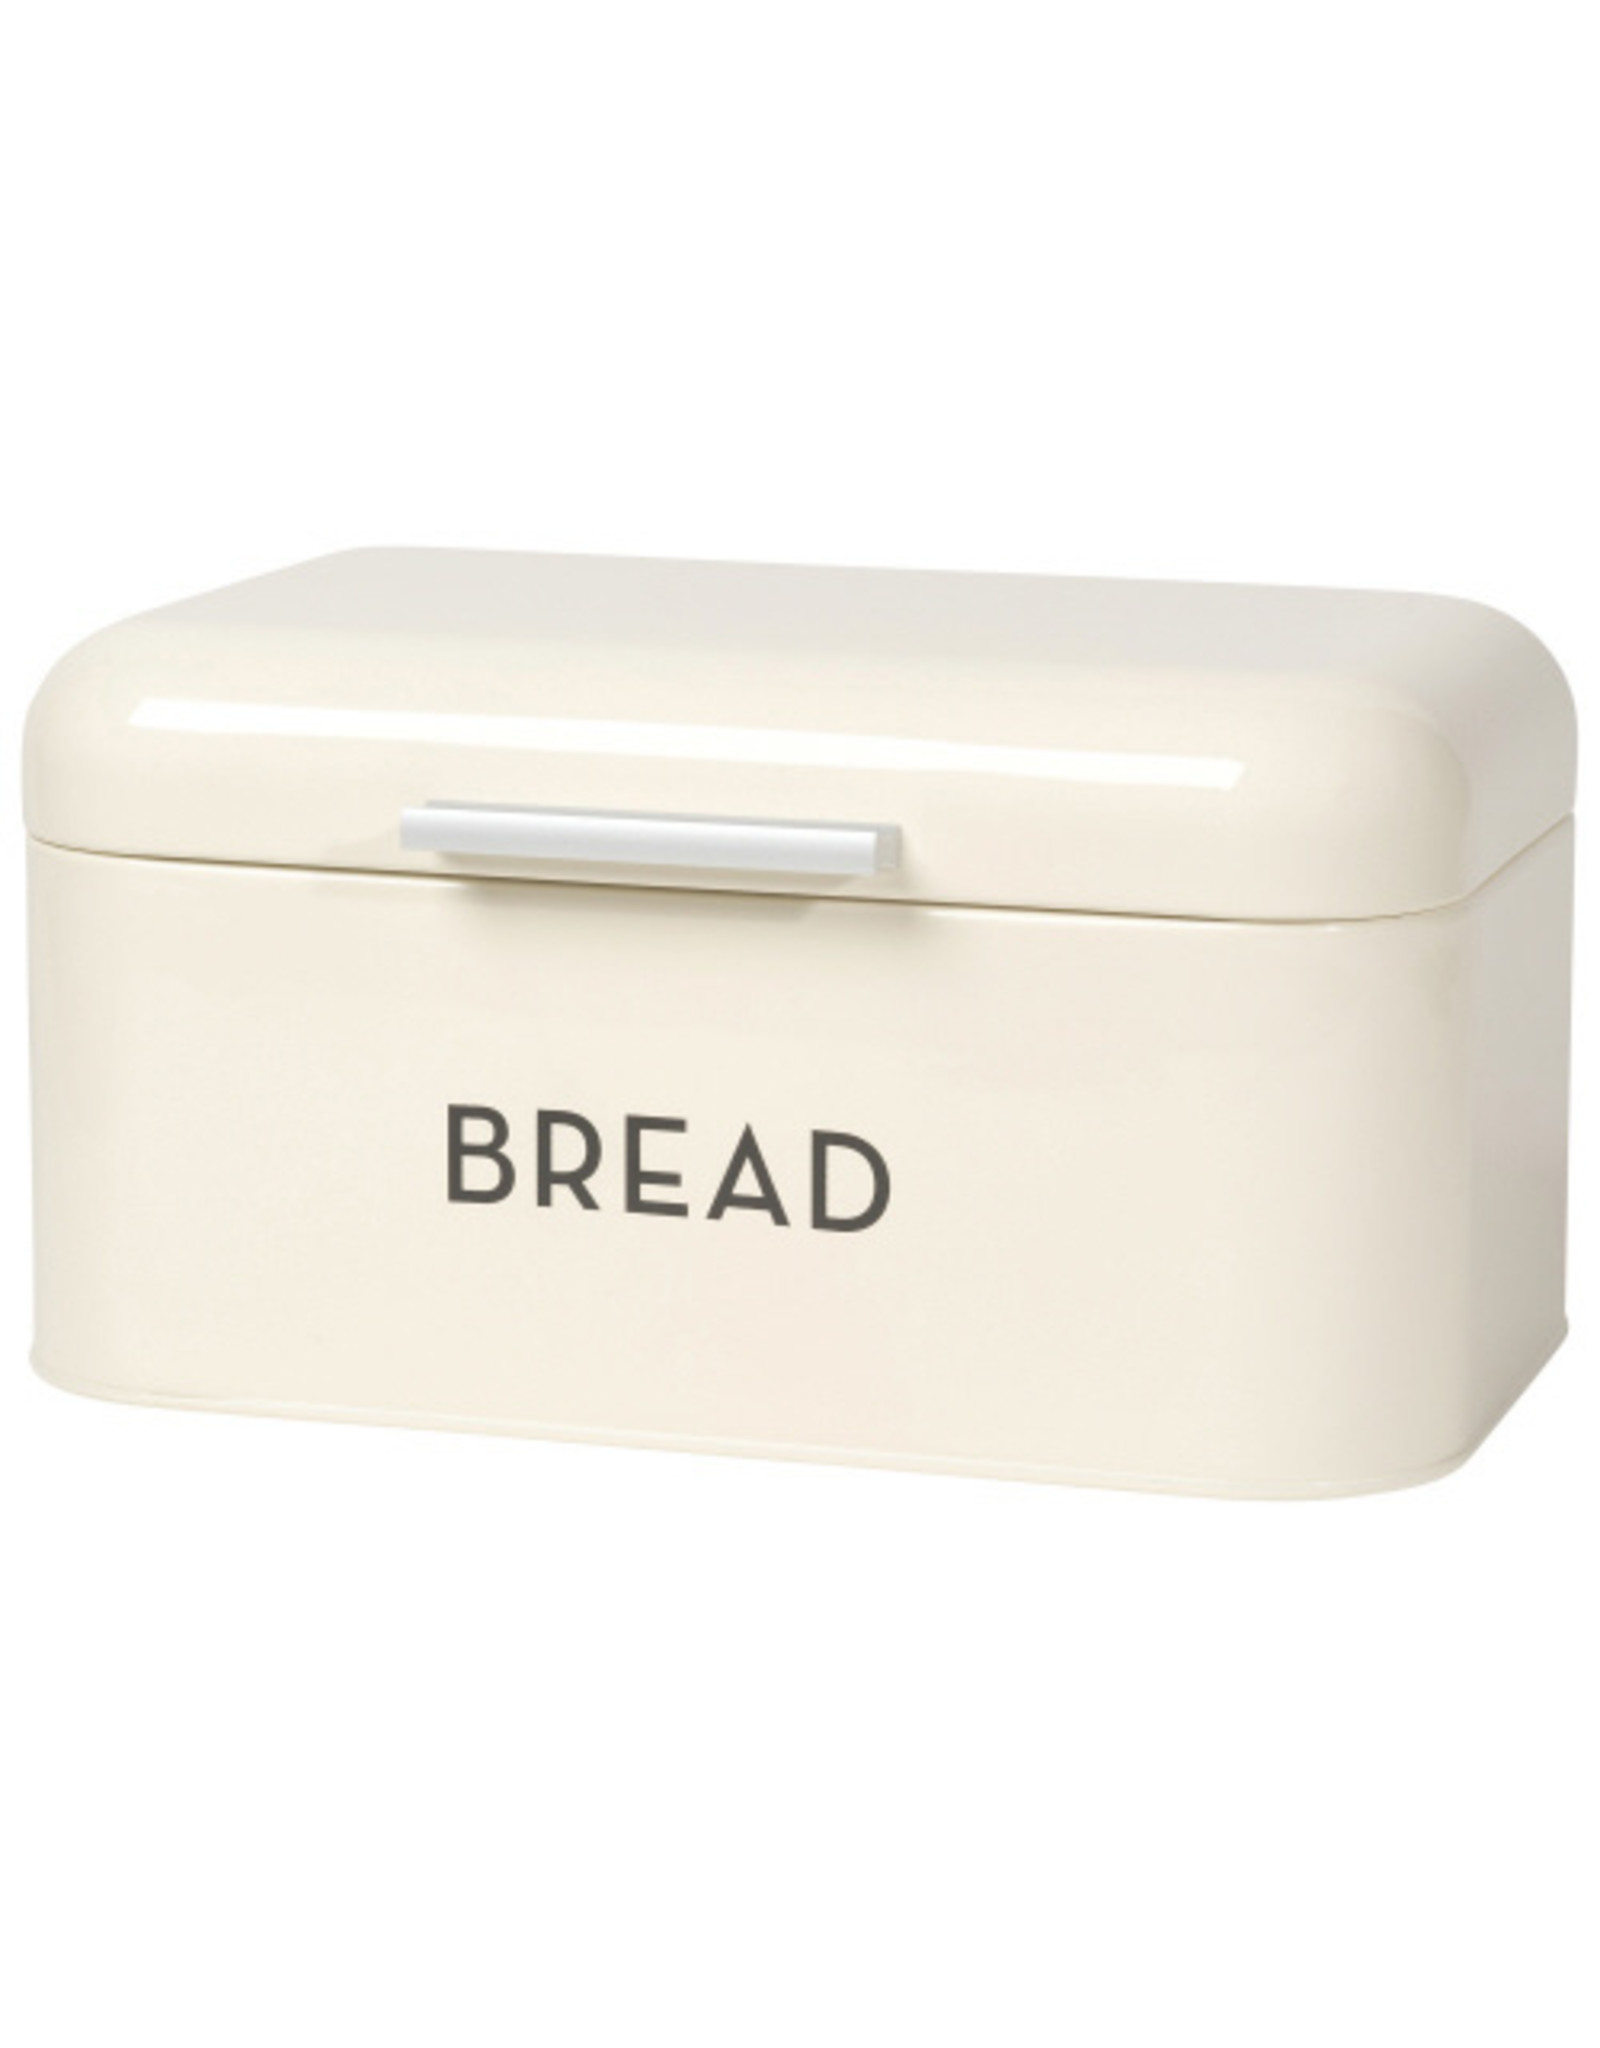 Bread Bin Small